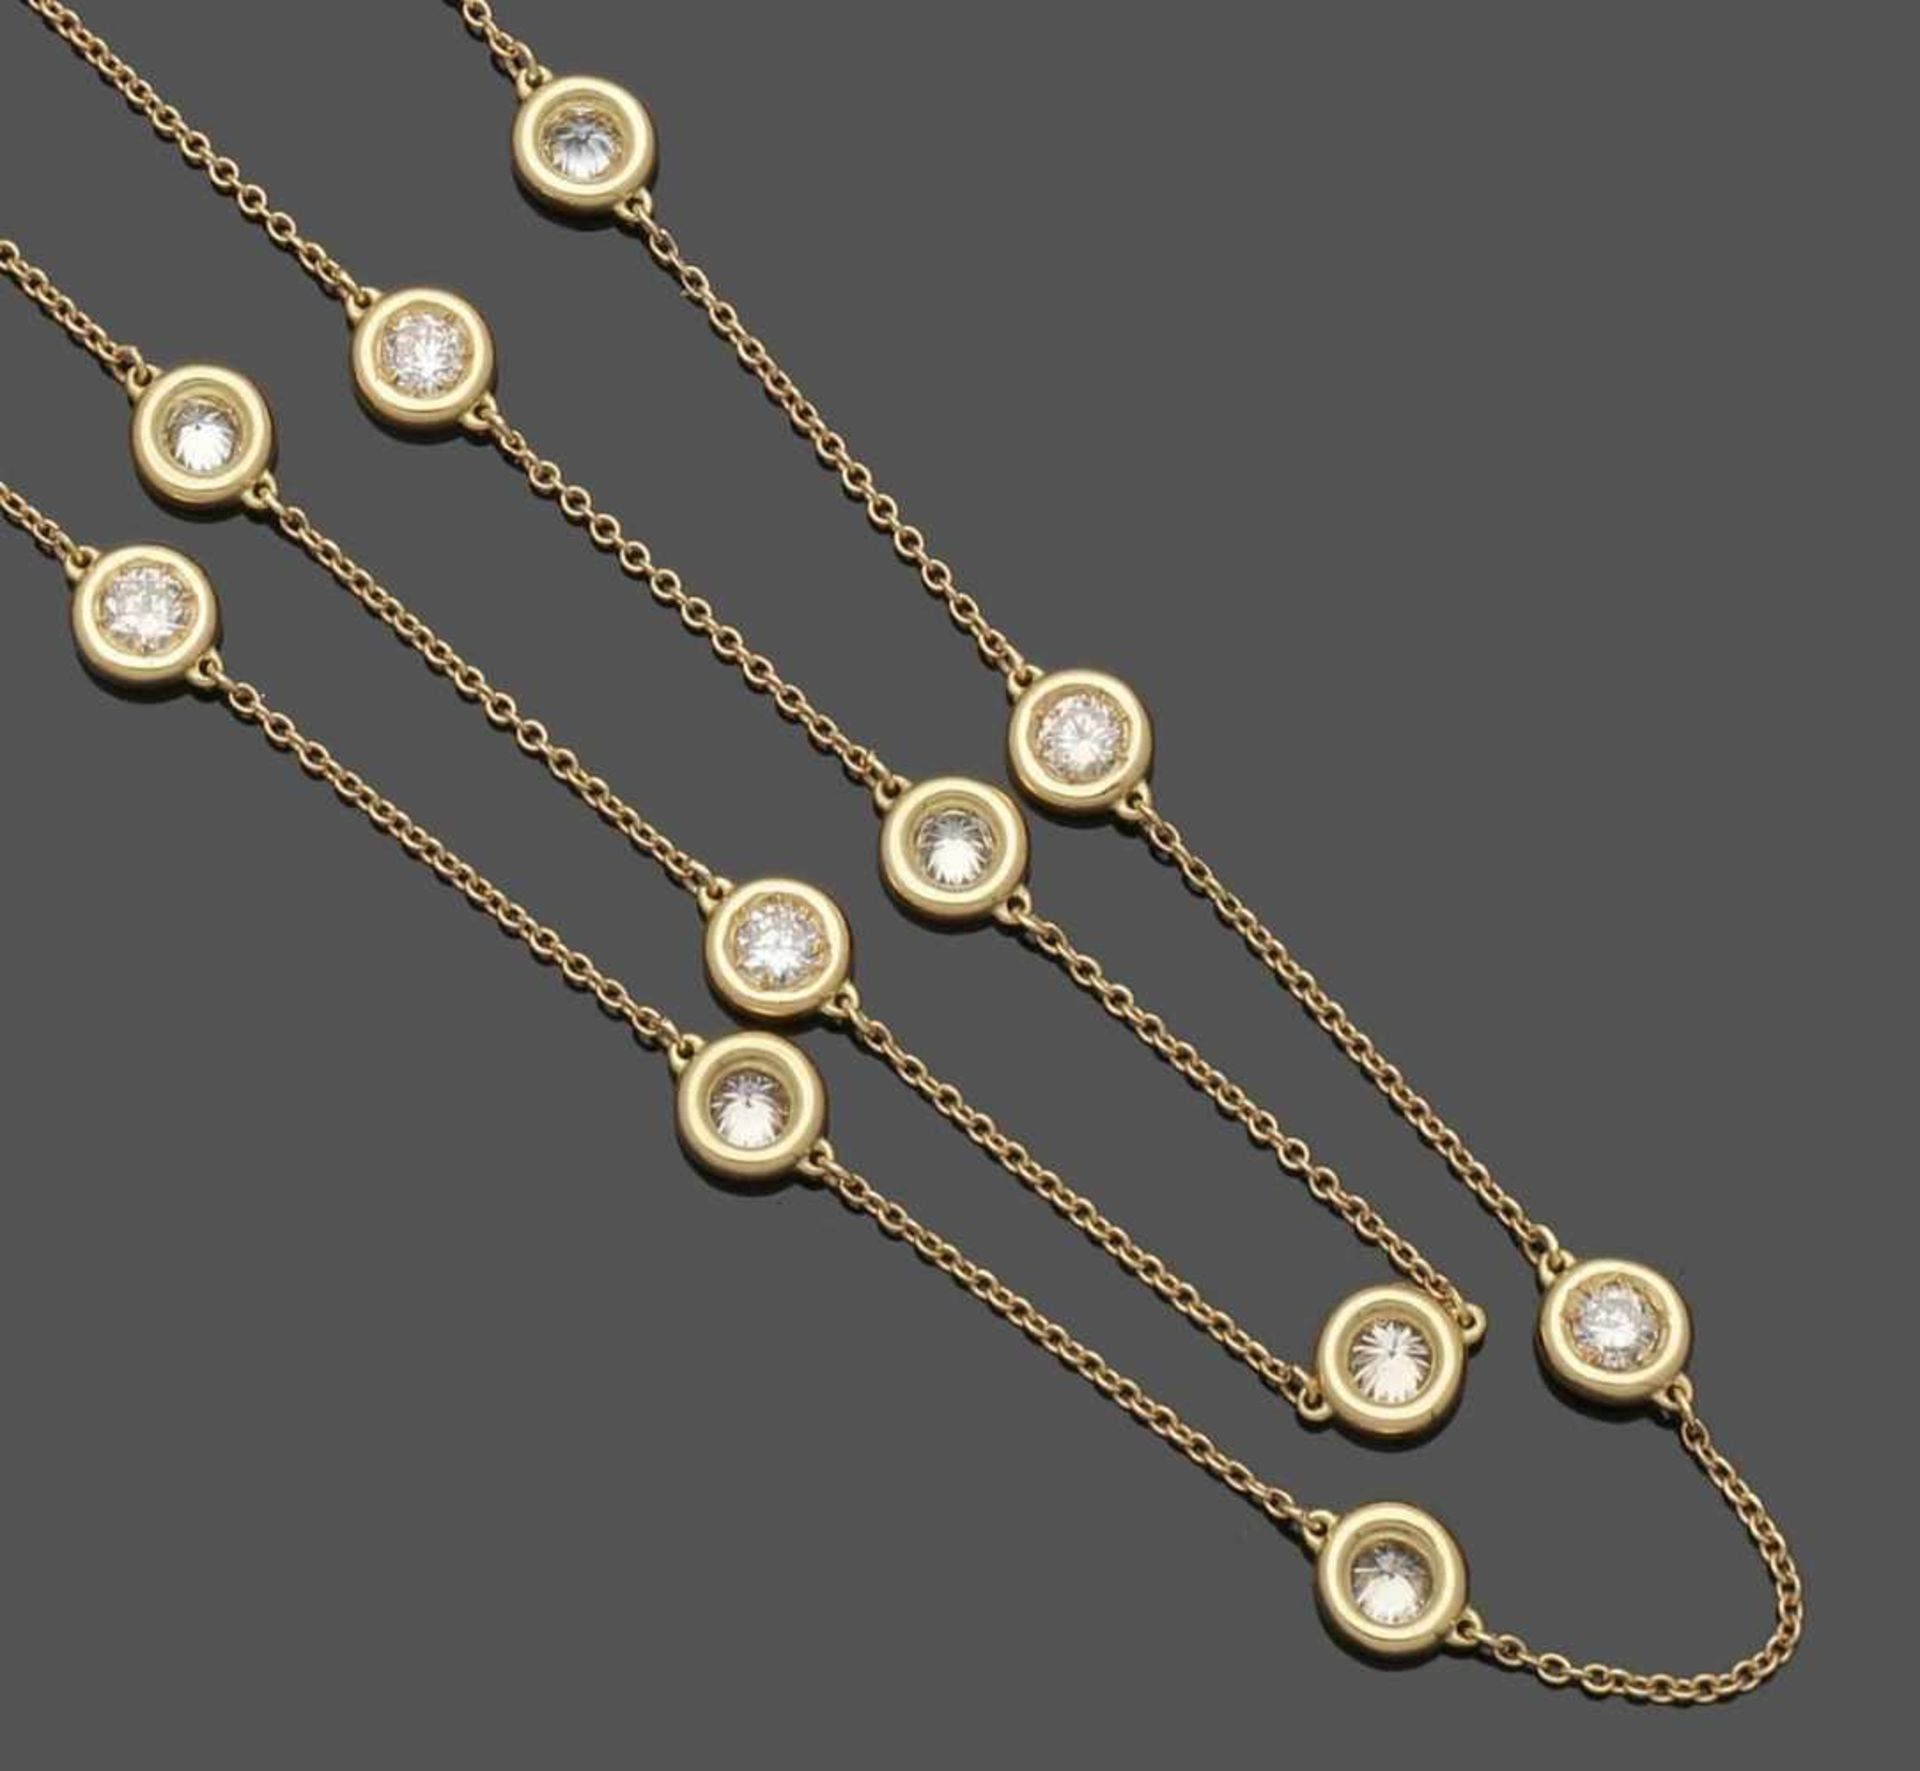 Langes Brillantcollier A long diamond necklace 750er GG, gestemp. 27 Brillanten zus. ca. 5,2 ct.